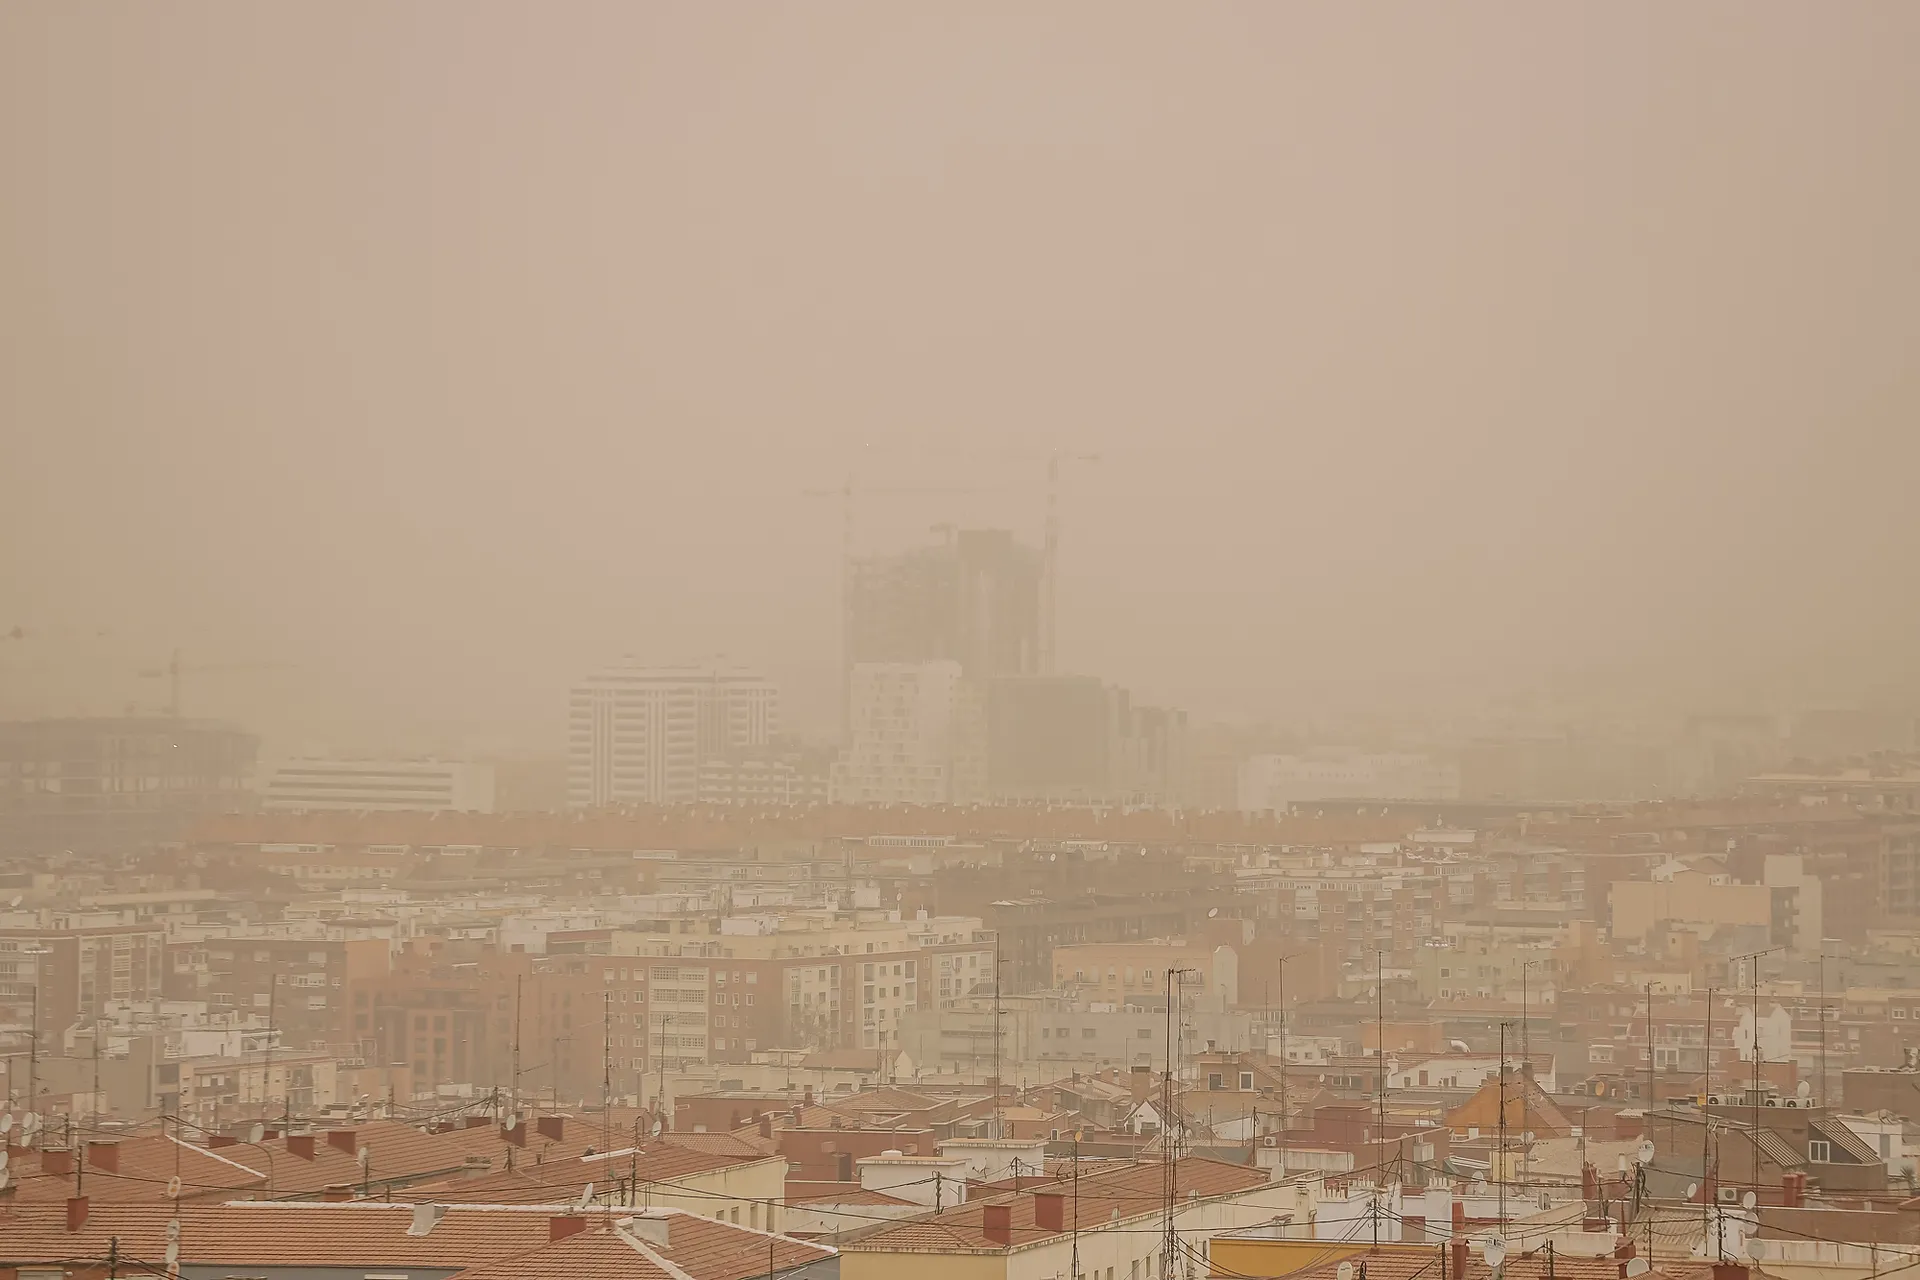 Madrid wrapped in sandstorm